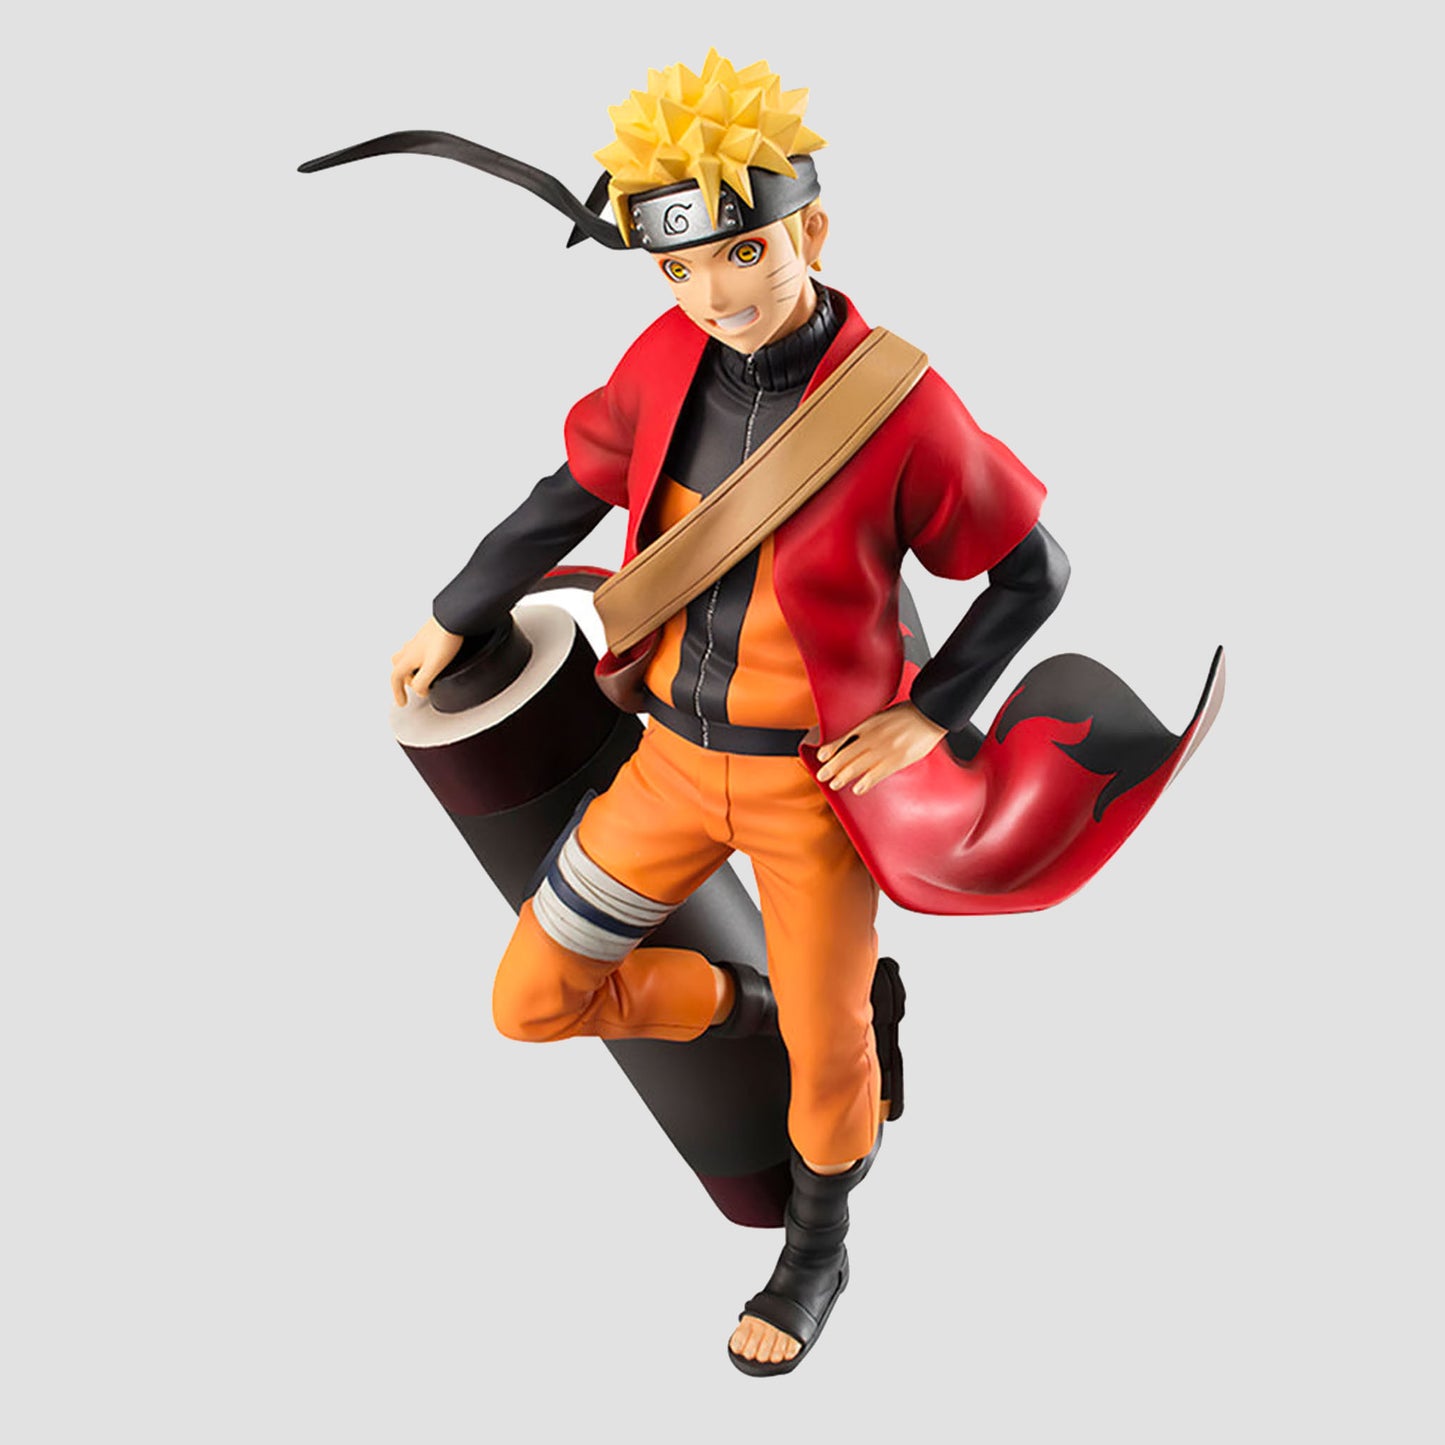 Naruto: Shippuden Anime Heroes Naruto (Six Paths Sage Mode)